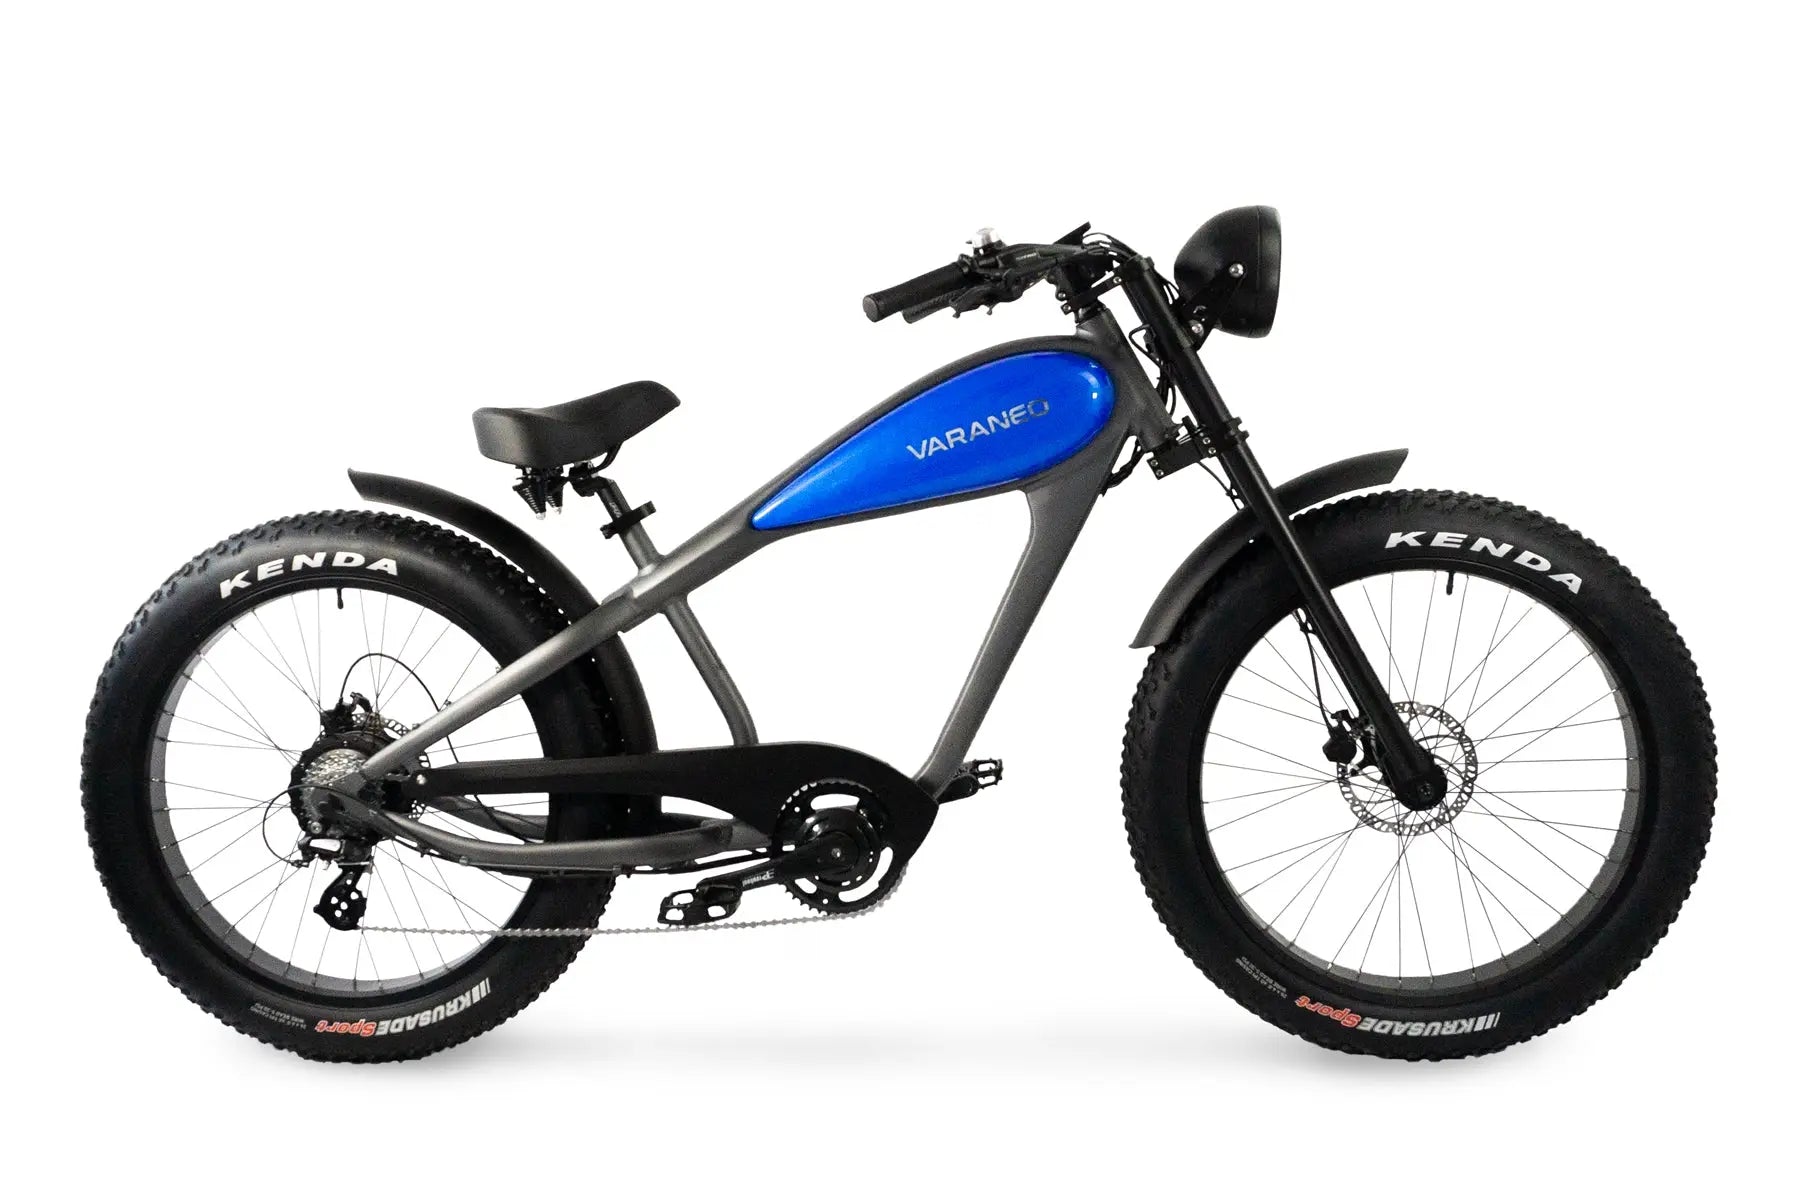 e-Bike | VARANEO Café Racer (25km/h, bis zu 80km) e-mobility.vip